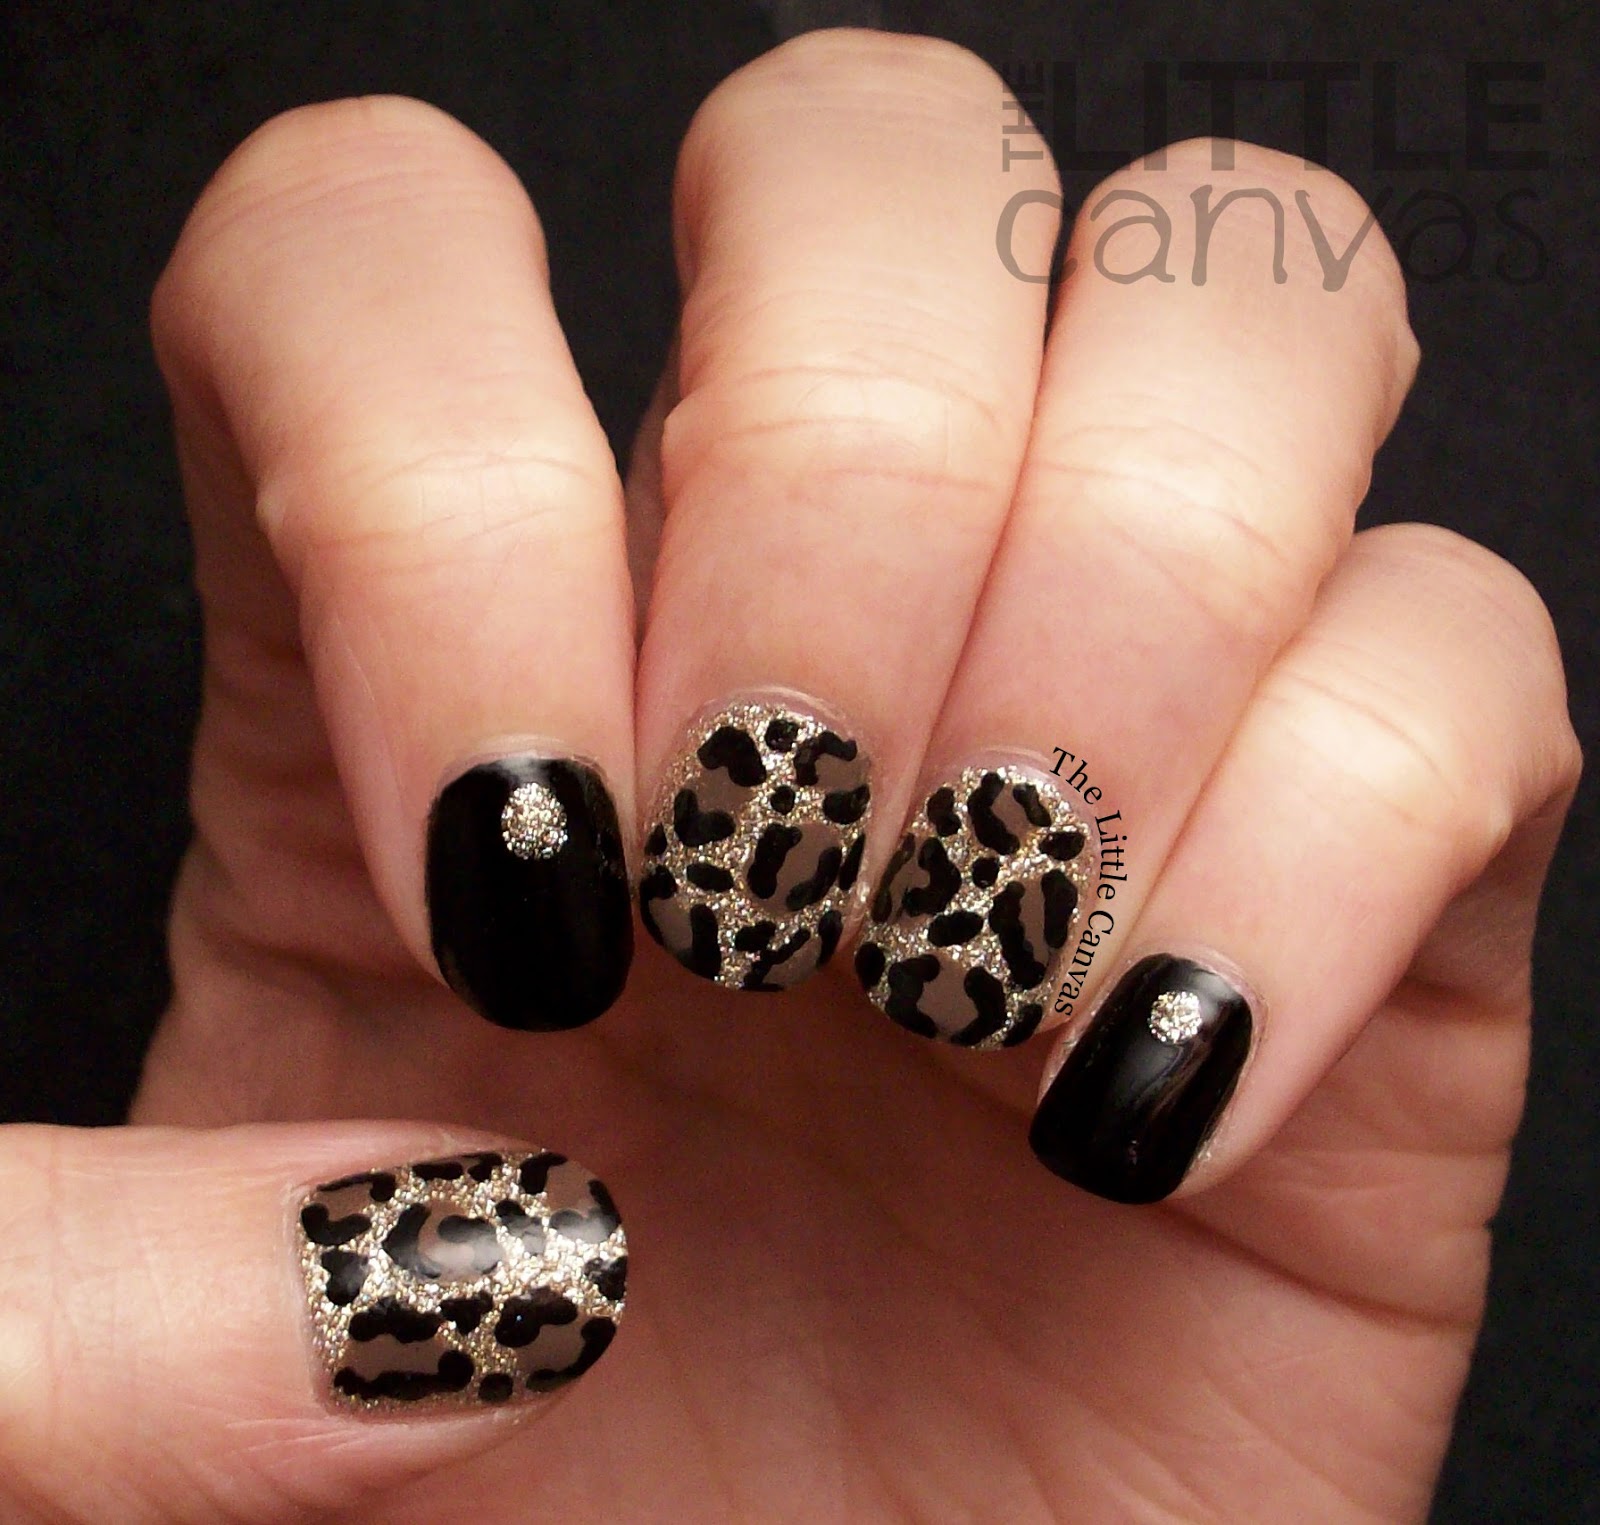 Stiletto nails with leopard print nail art | Nic Senior | Flickr